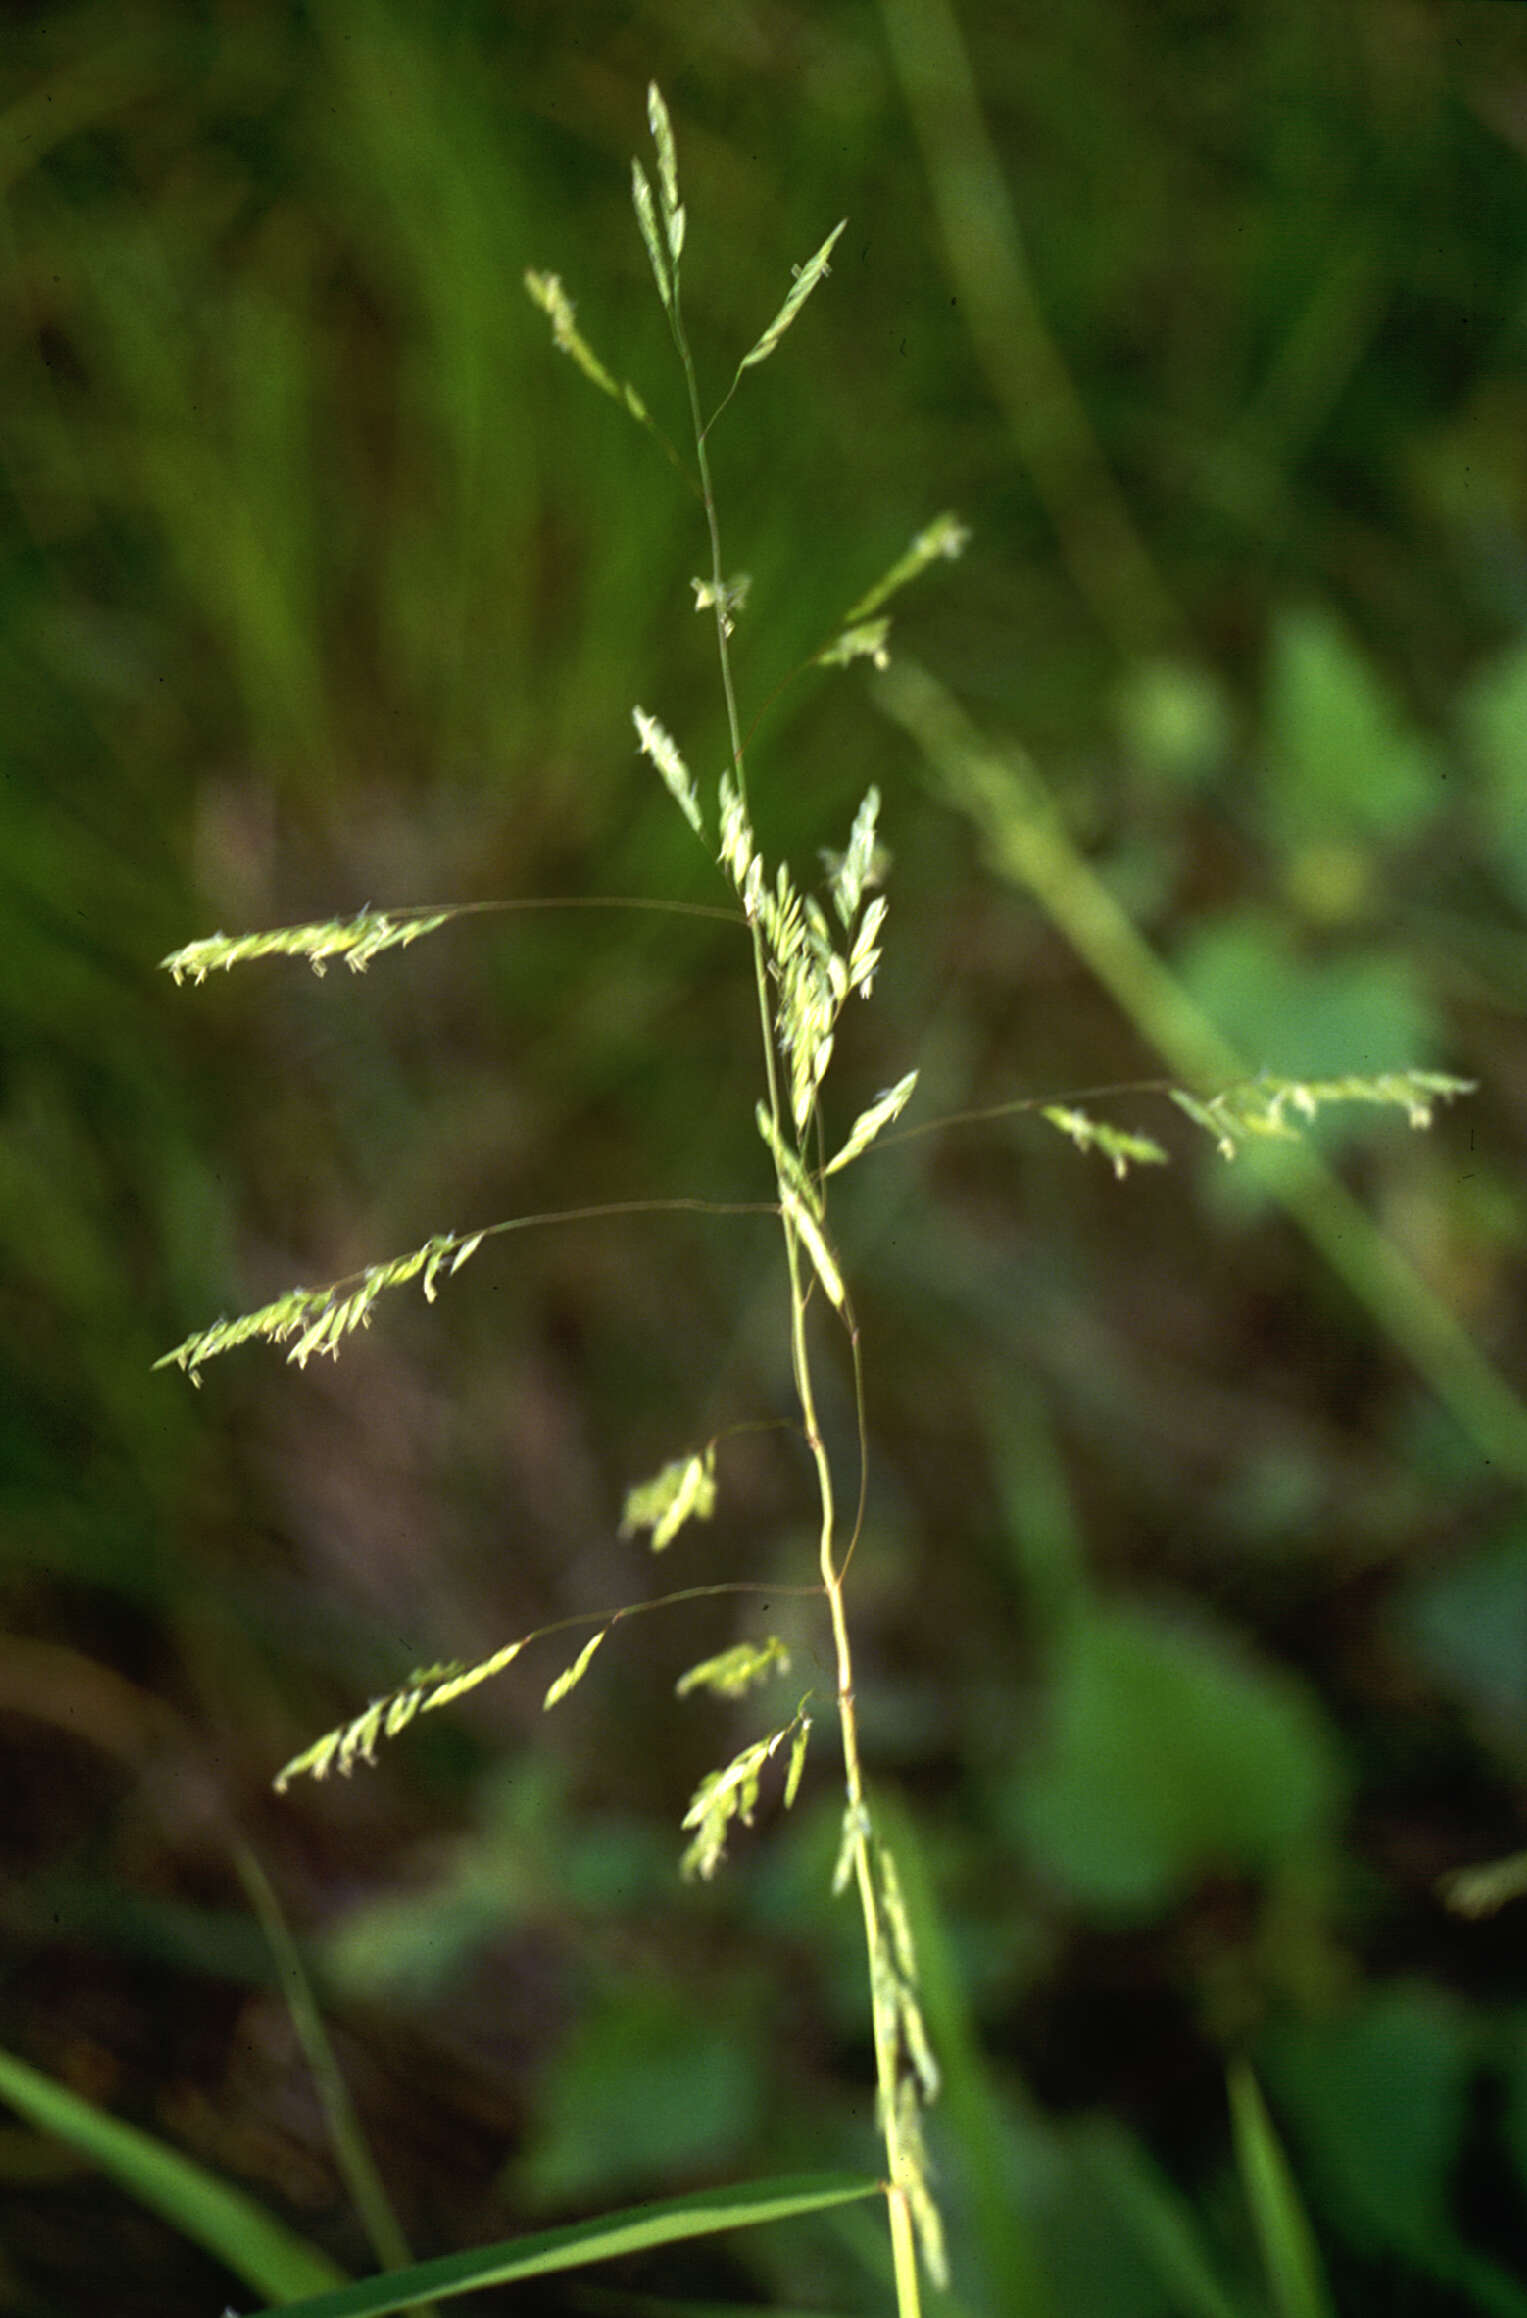 Image of Cut-grass